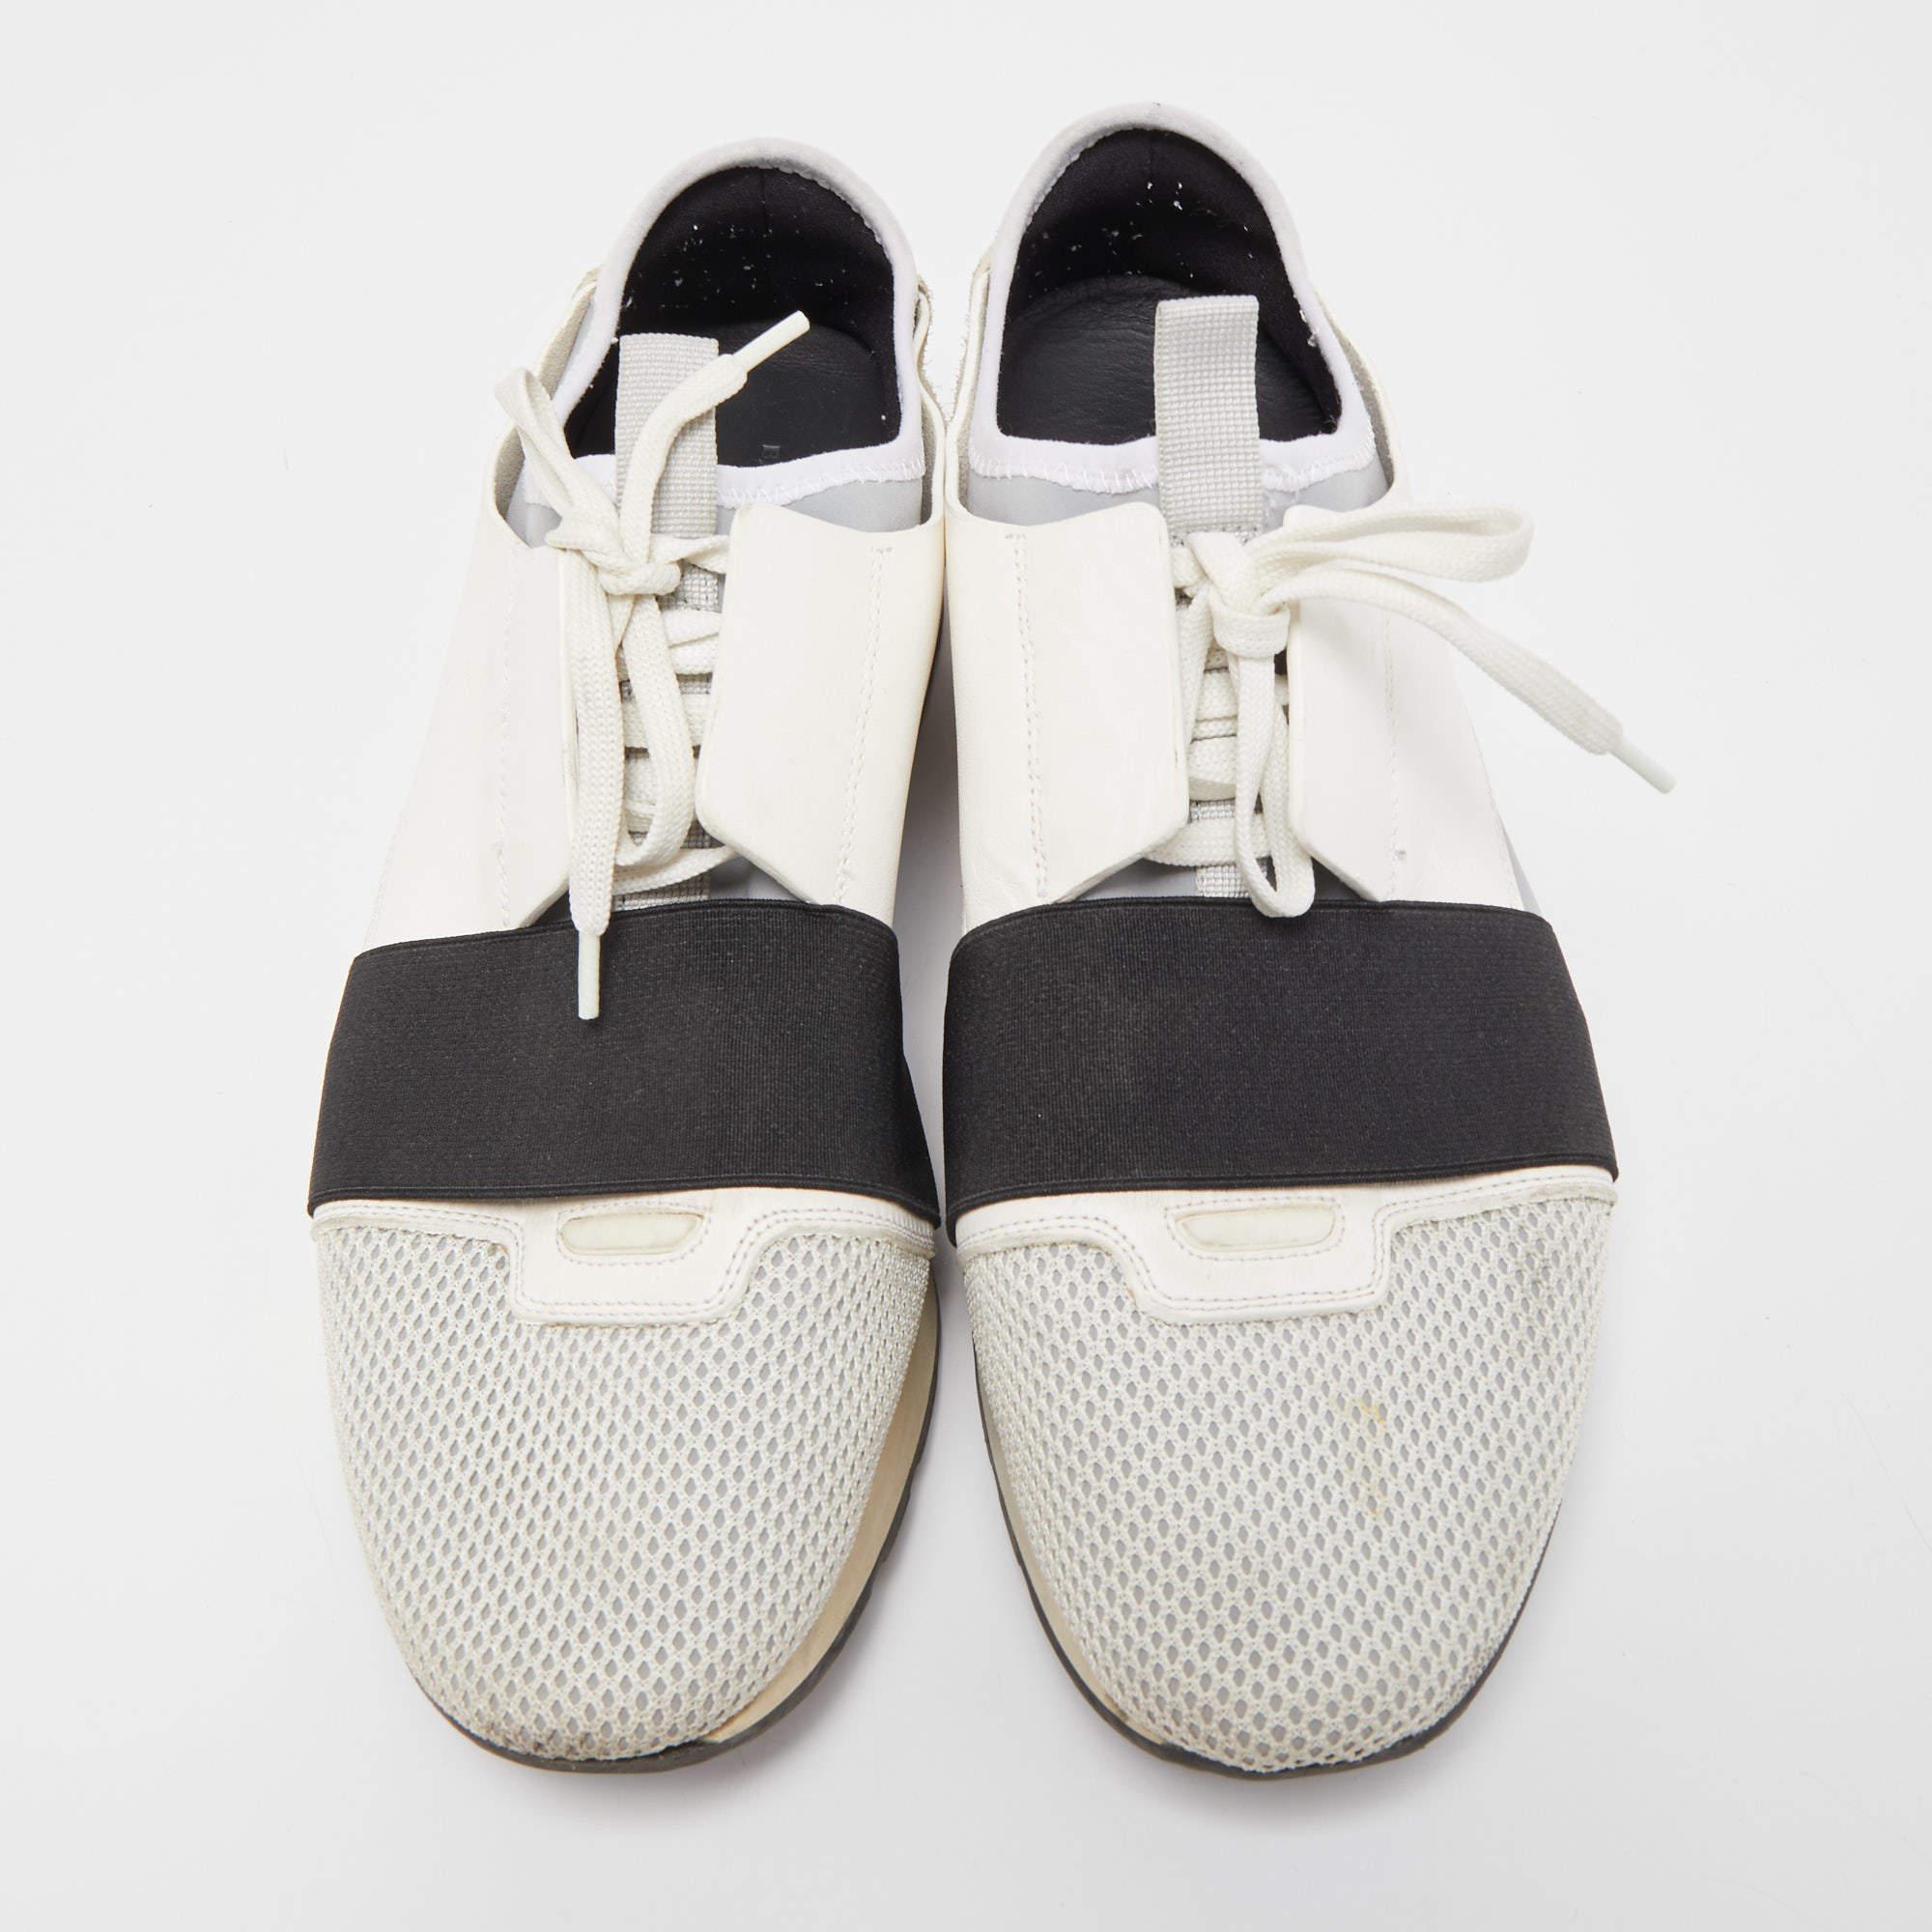 Balenciaga Tricolor Mesh and Leather Race Runner Sneakers Size 43 In Good Condition For Sale In Dubai, Al Qouz 2